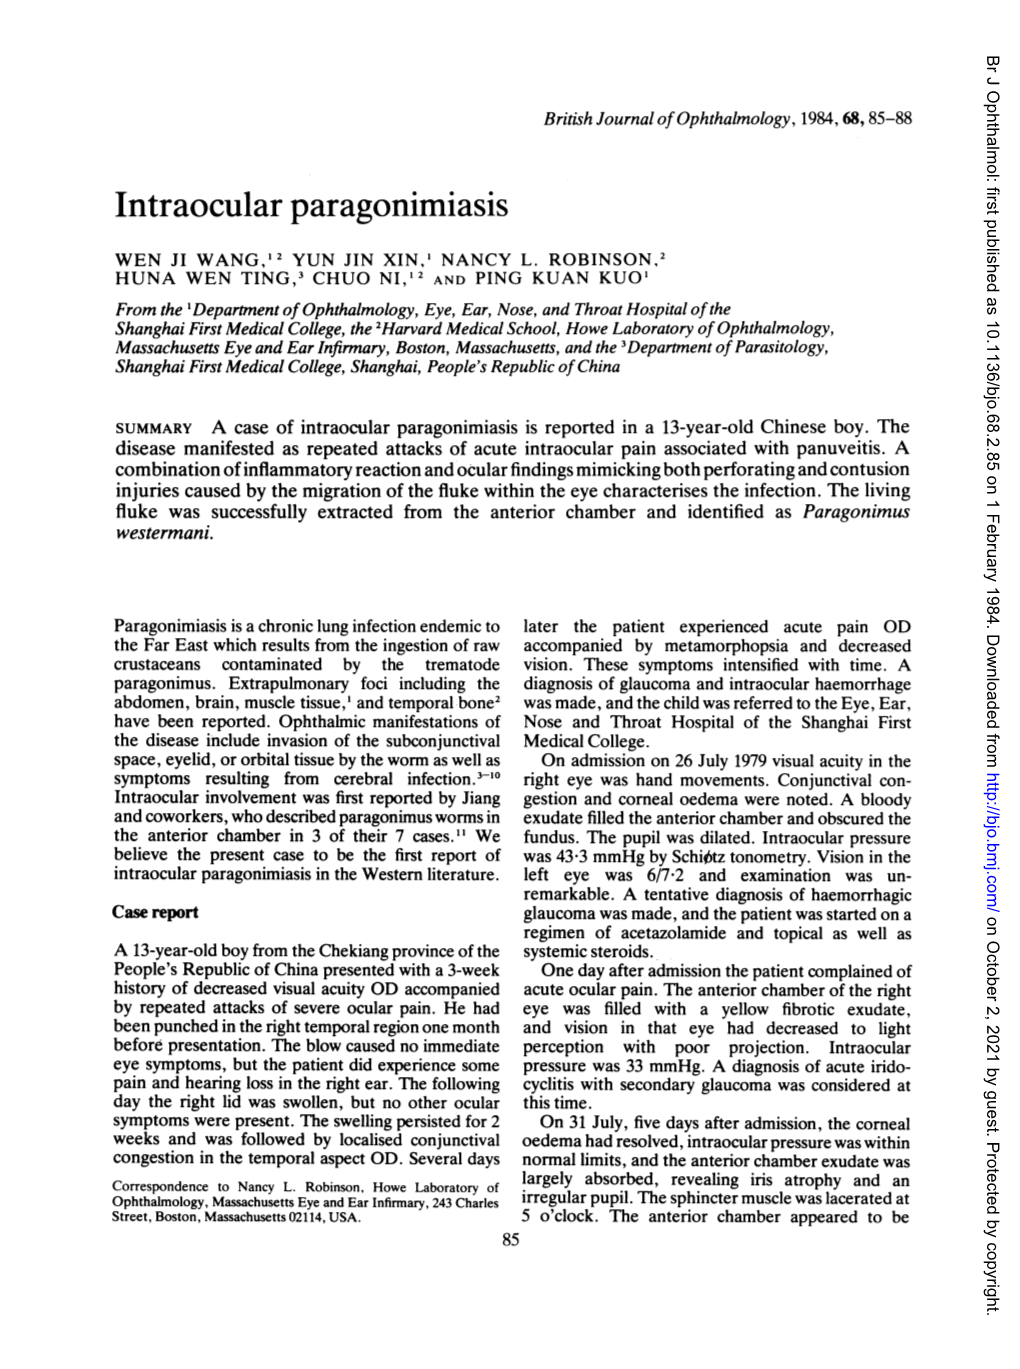 Intraocular Paragonimiasis